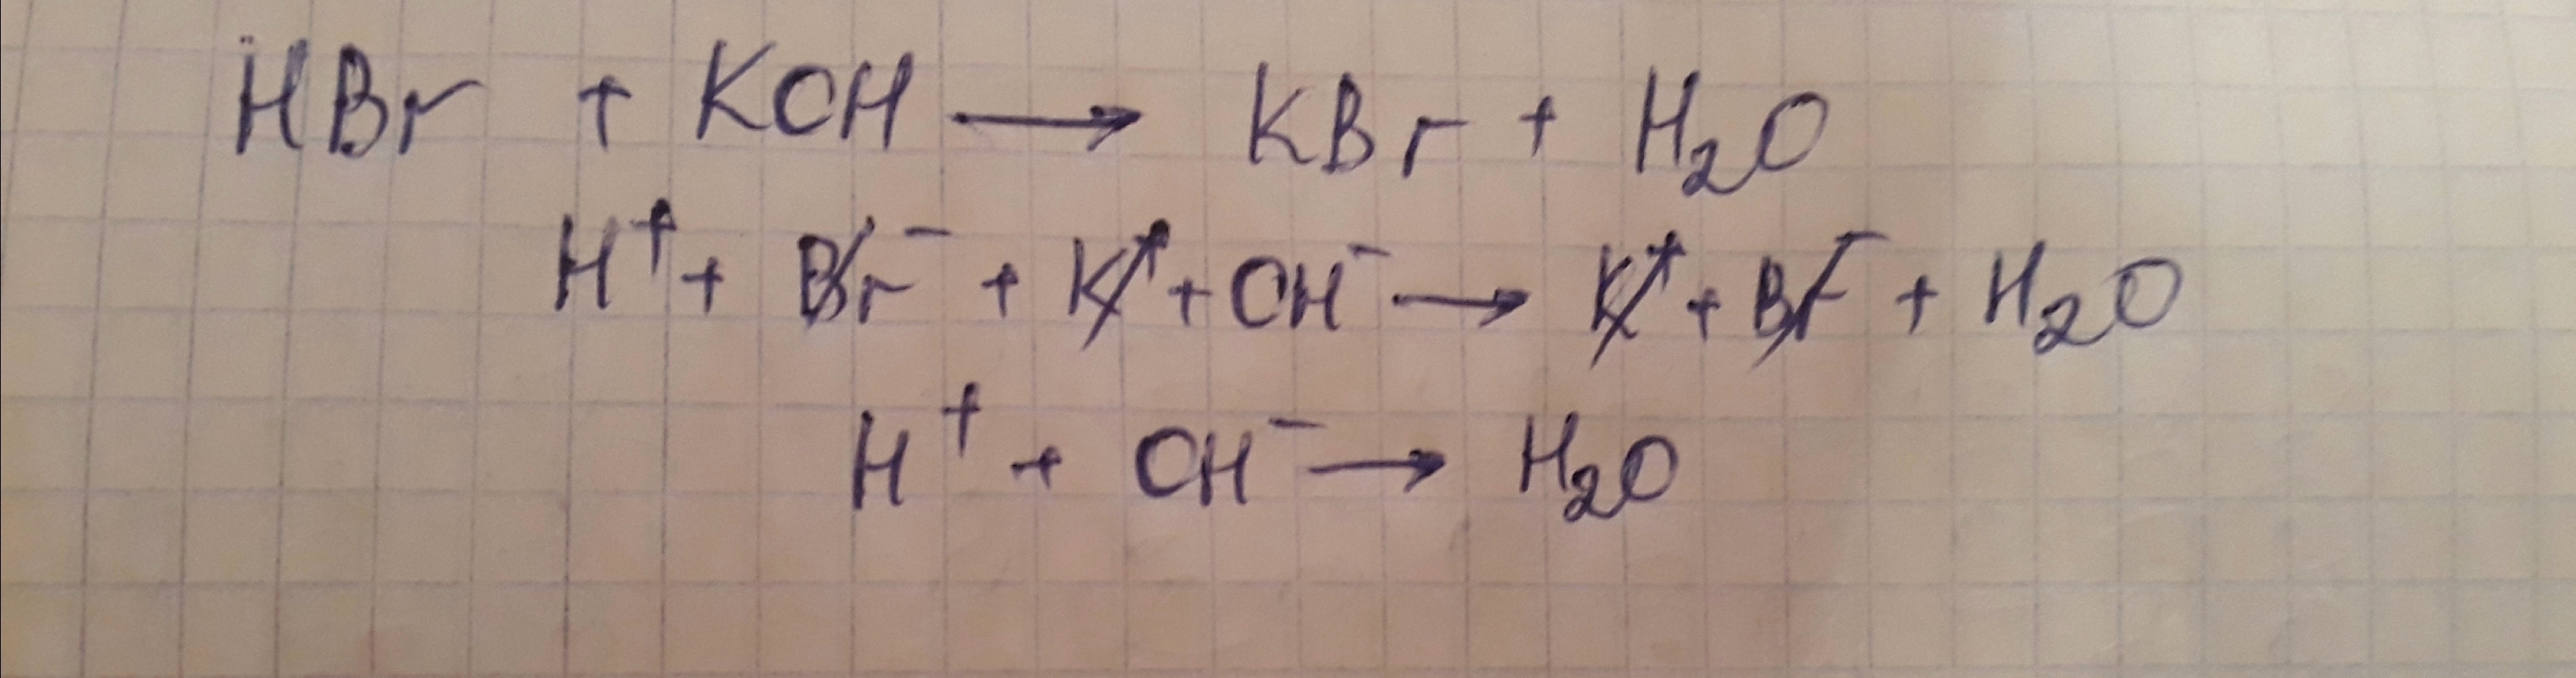 S n2 уравнение реакции. Hbr+Koh.